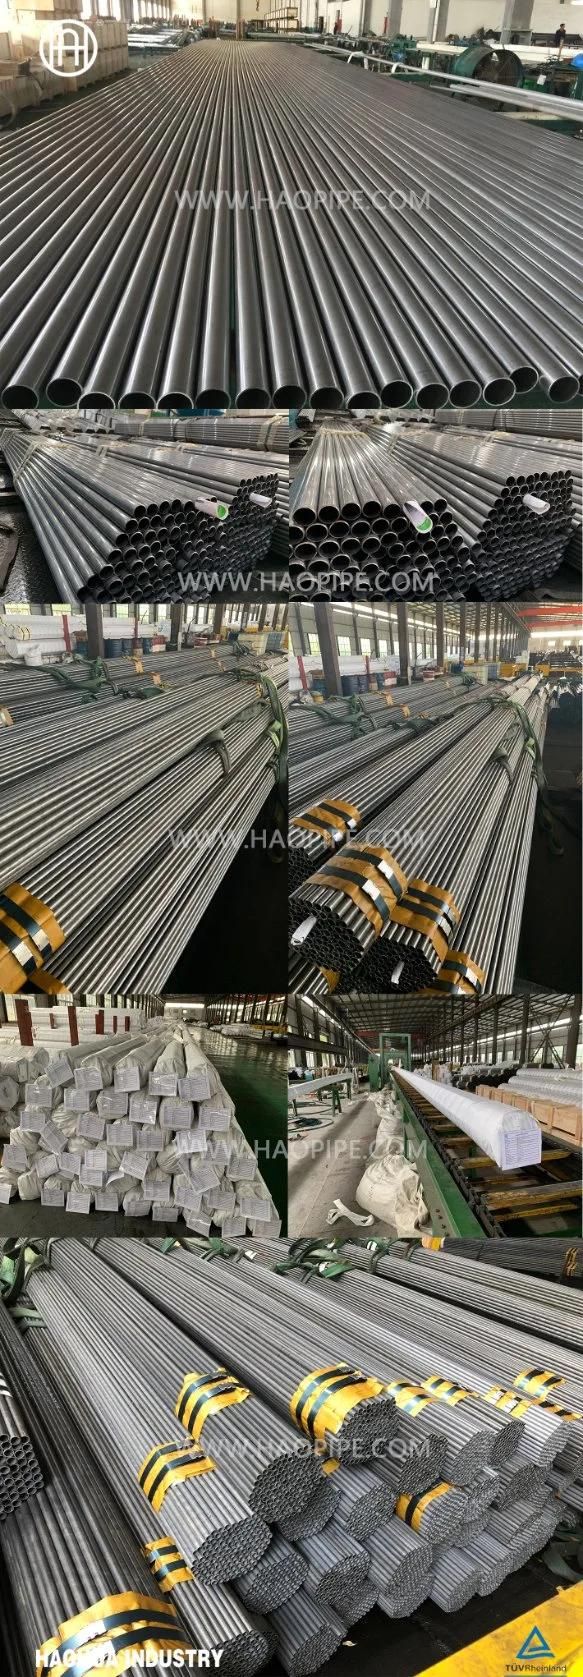 En10216-2 P235gh Seamless Carbon Steel Pipe Seamless Carbon Steel Tube